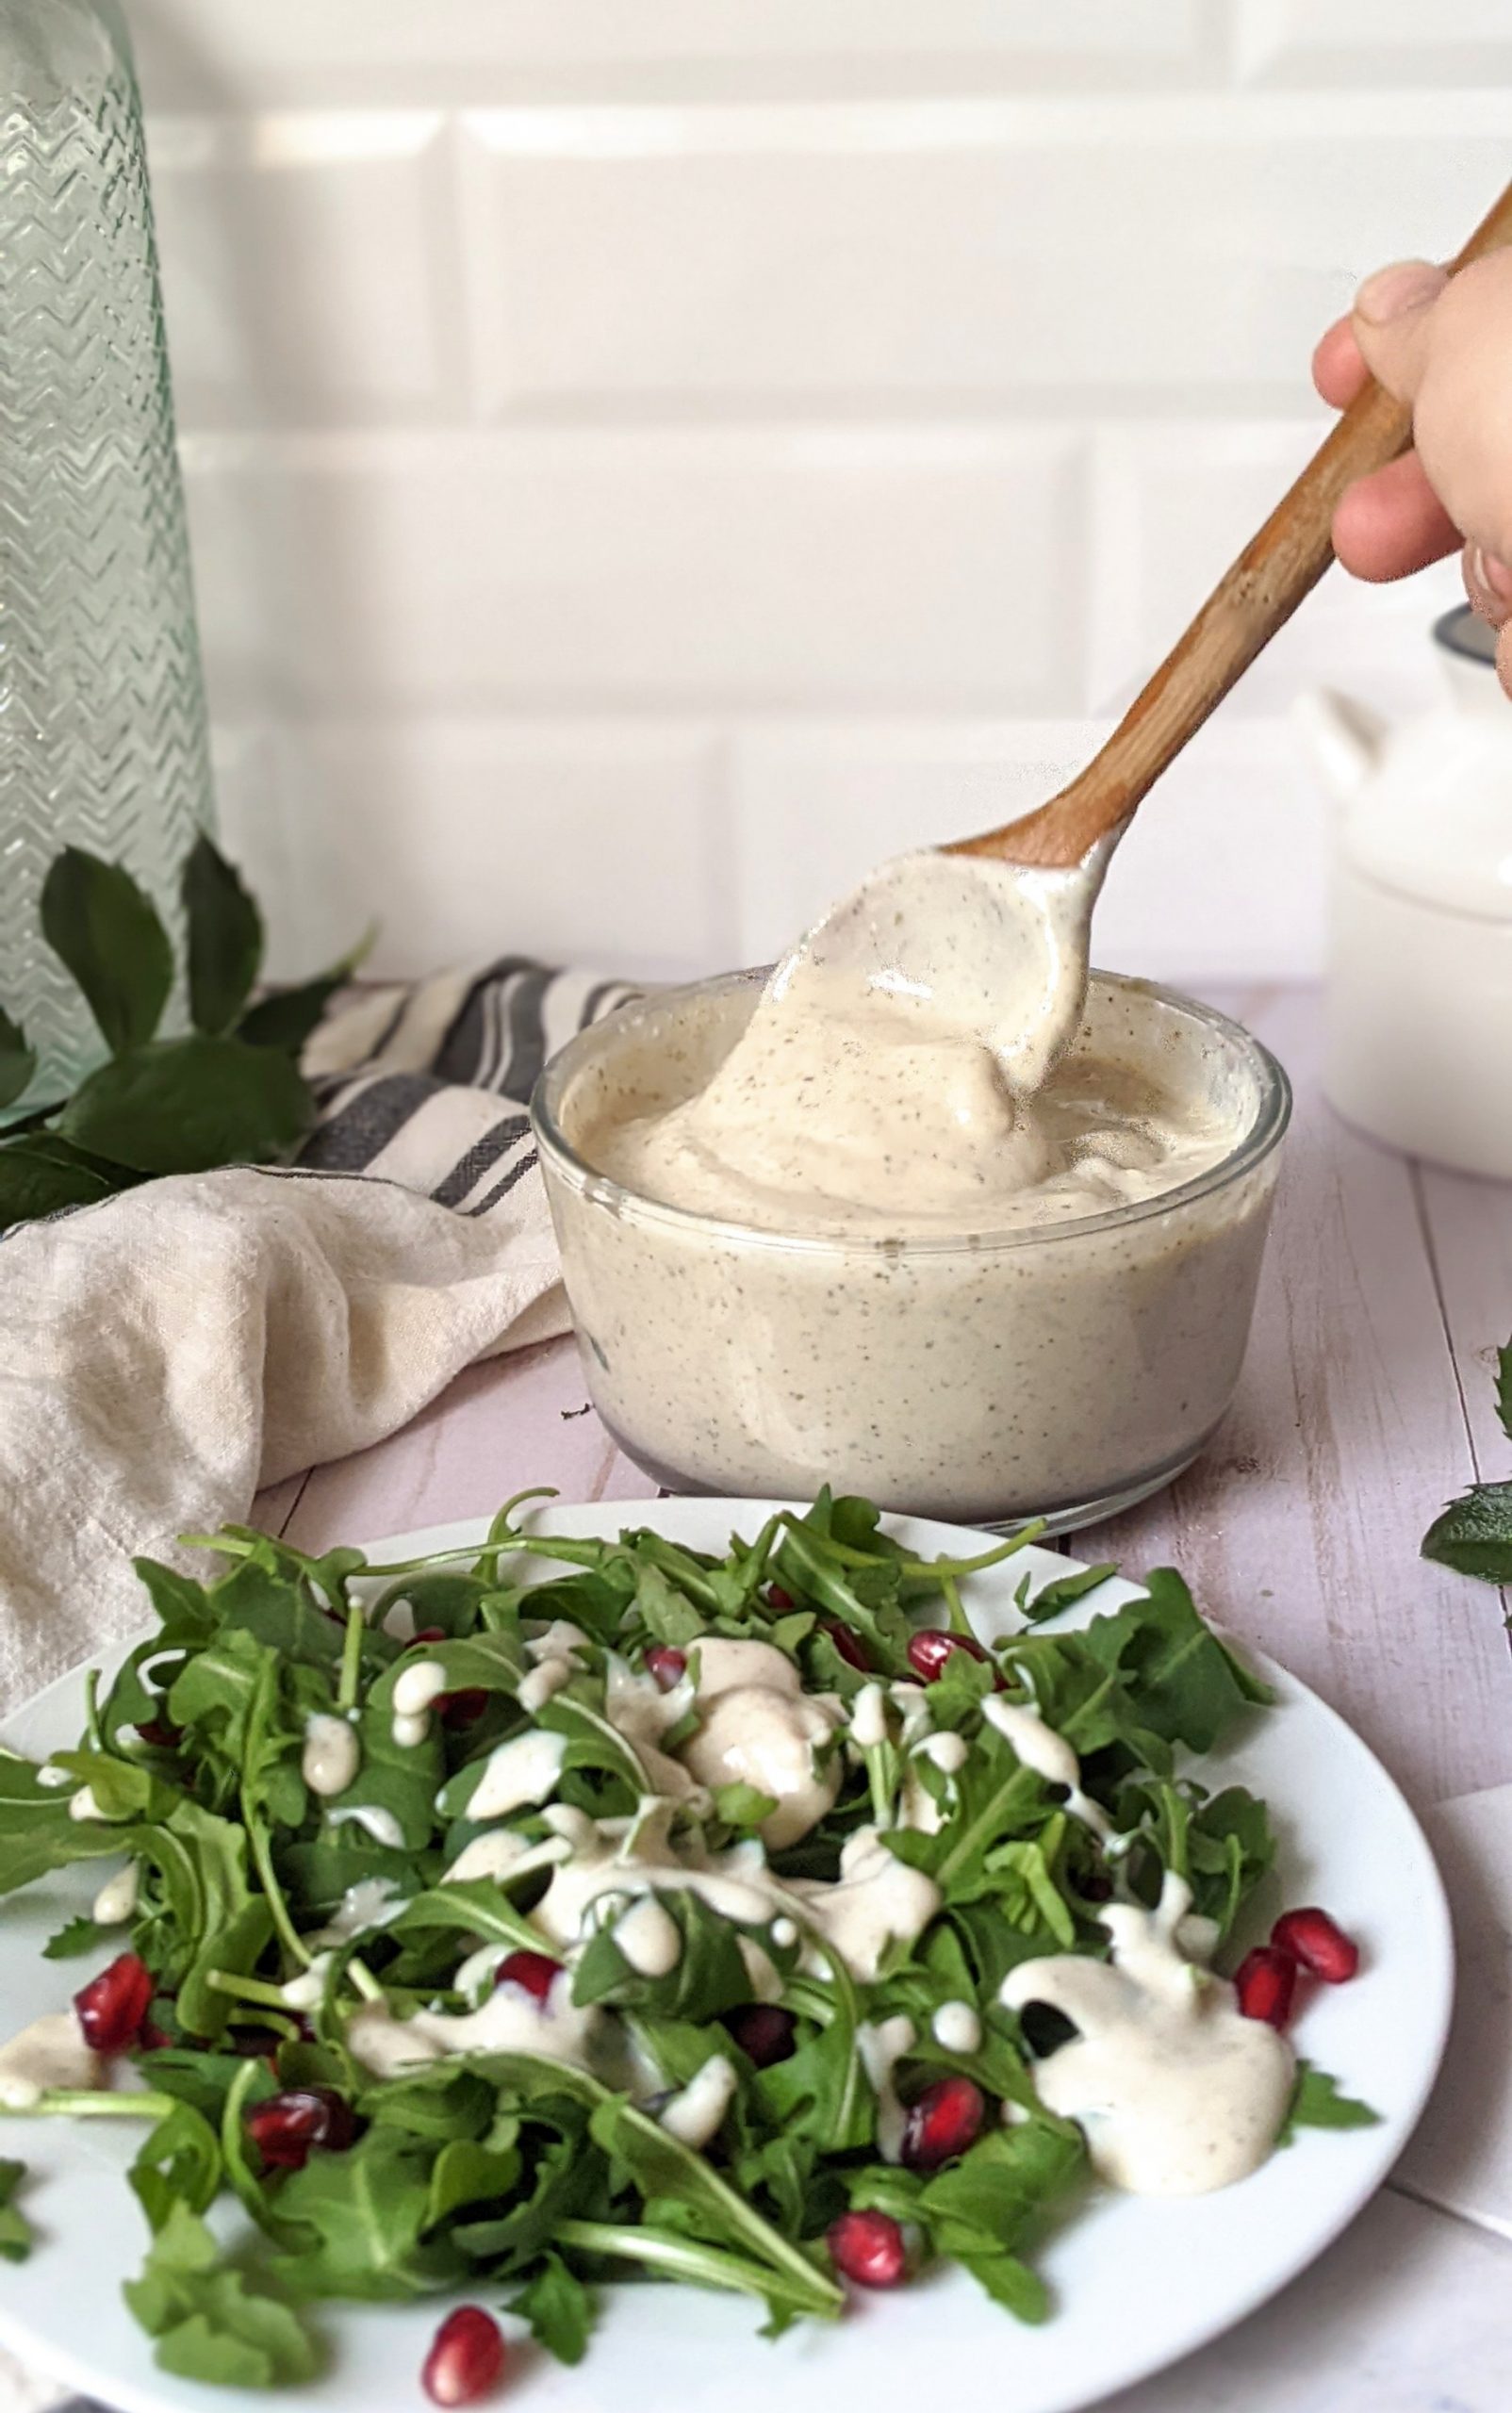 dairy free caesar salad dressing recipe vegan gluten free tofu creamy dressing for salads wraps and sandwiches